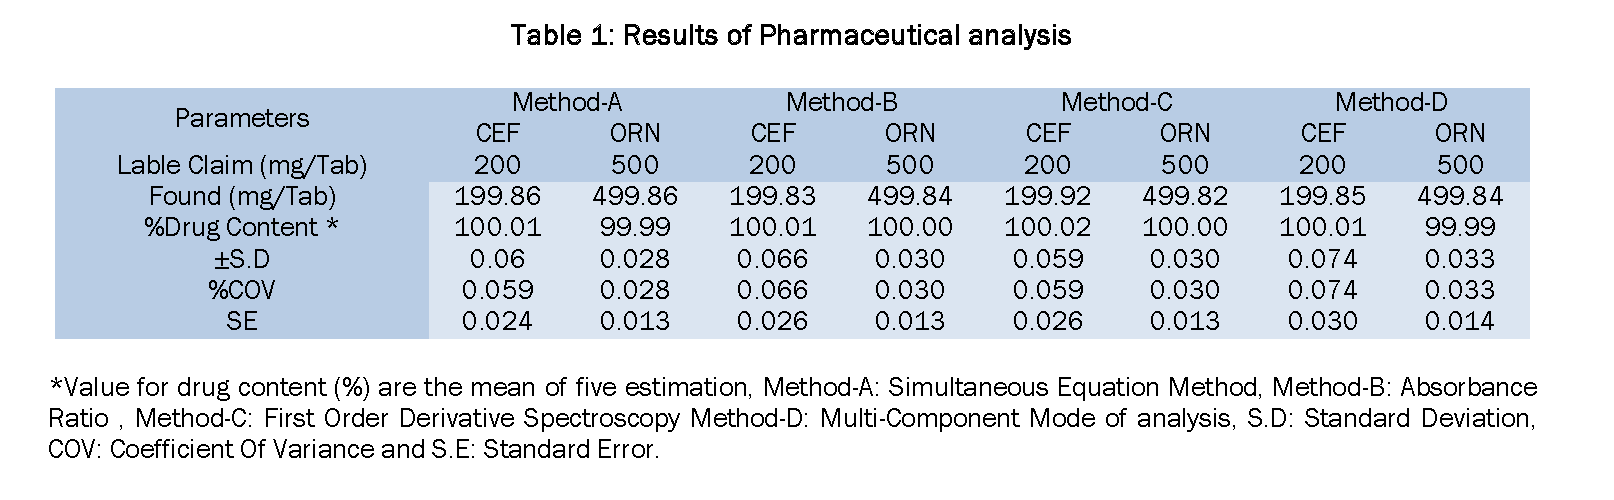 Pharmaceutical-Analysis-Results-Pharmaceutical-analysis